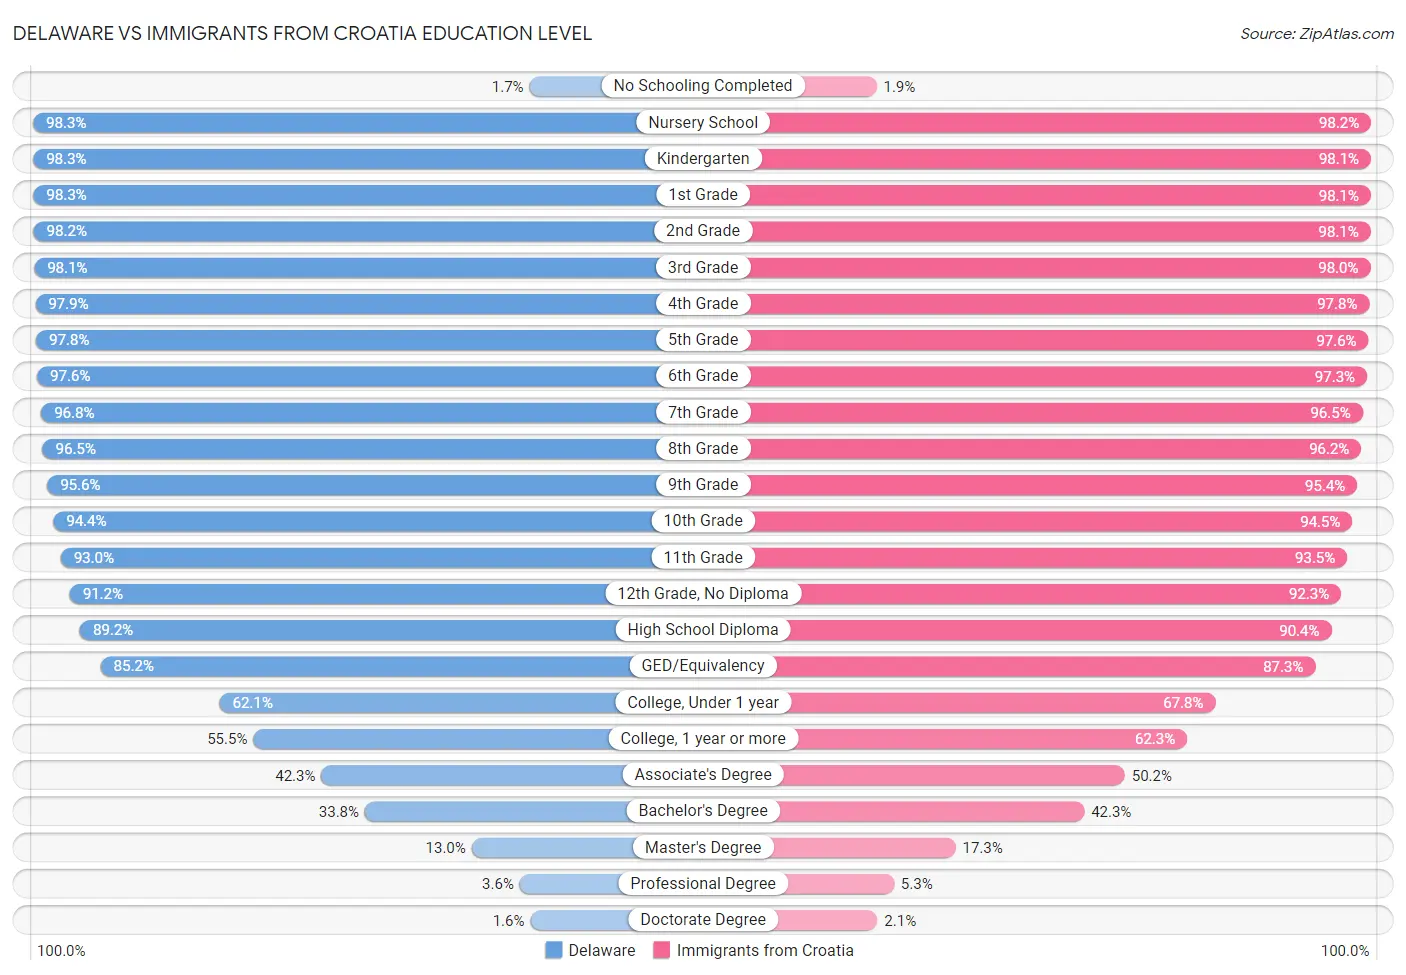 Delaware vs Immigrants from Croatia Education Level